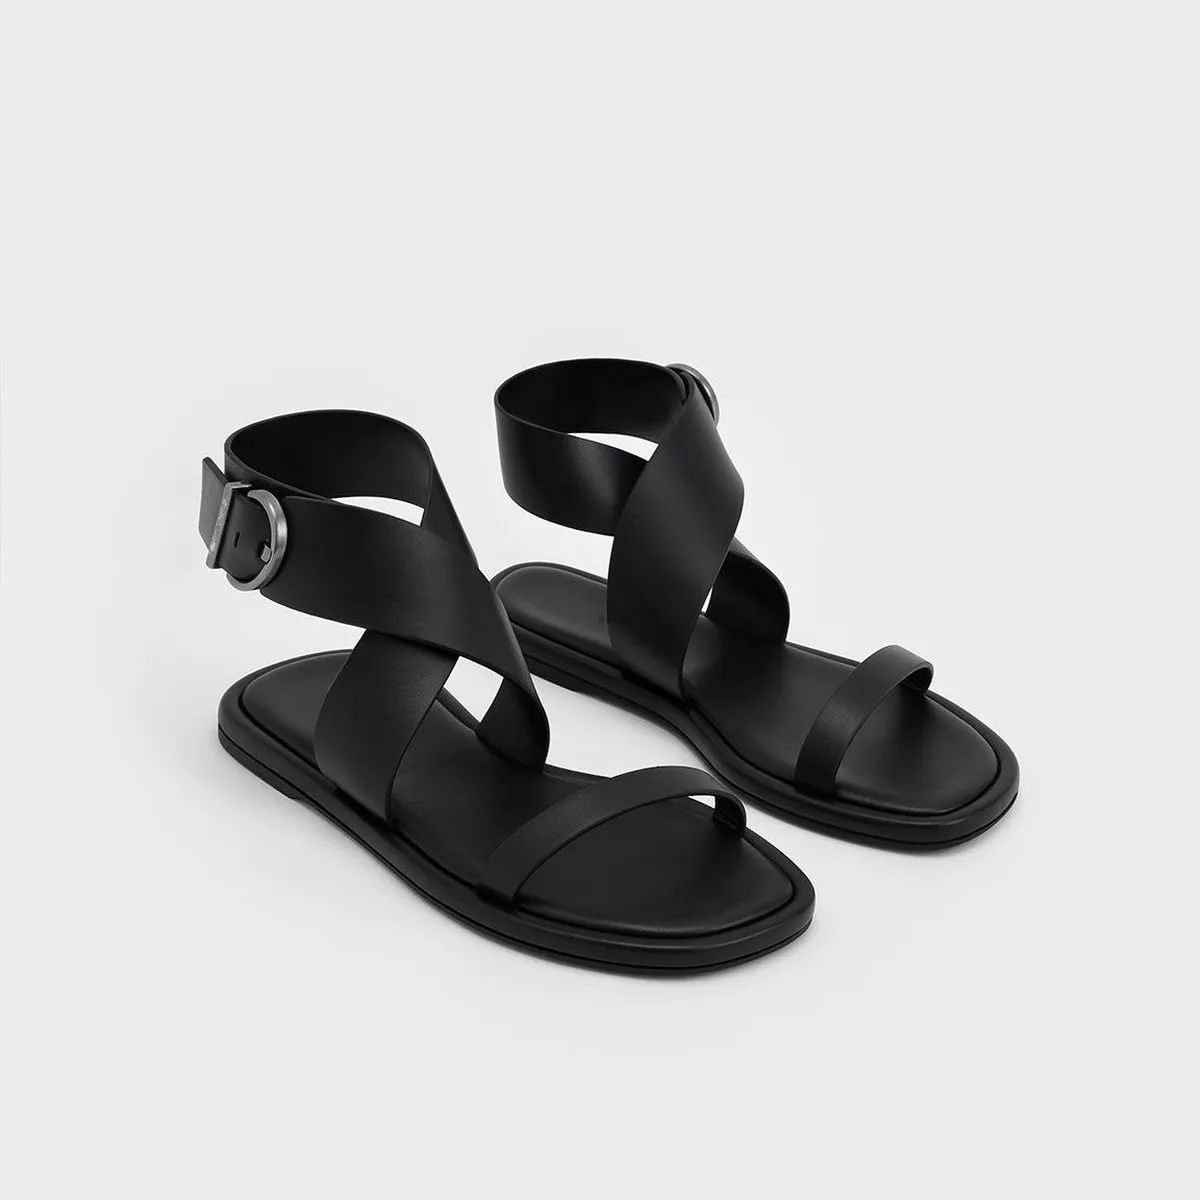 NEW Ladies flat sandals beautiful black color open toe buckle strap women flat ankle strap sandals ( shoes beautiful sandals )